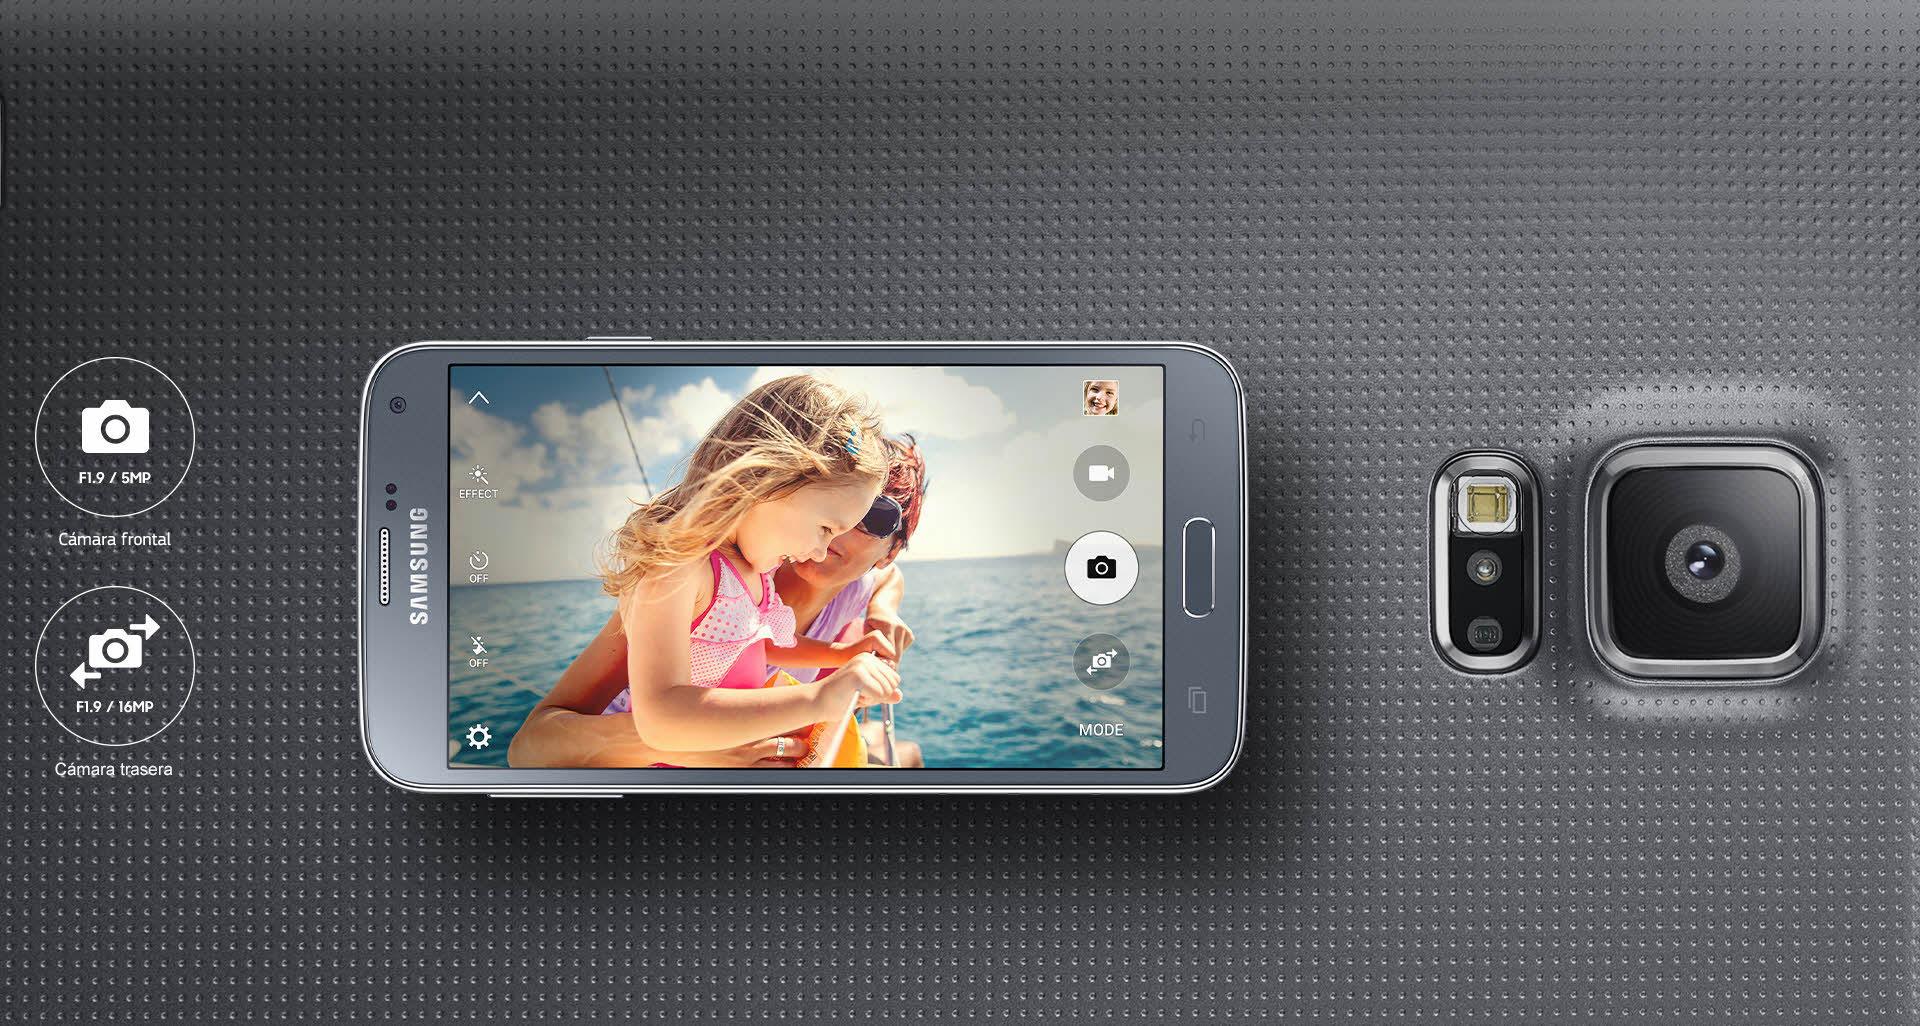 Samsung Galaxy S5 Neo detalles de cámara